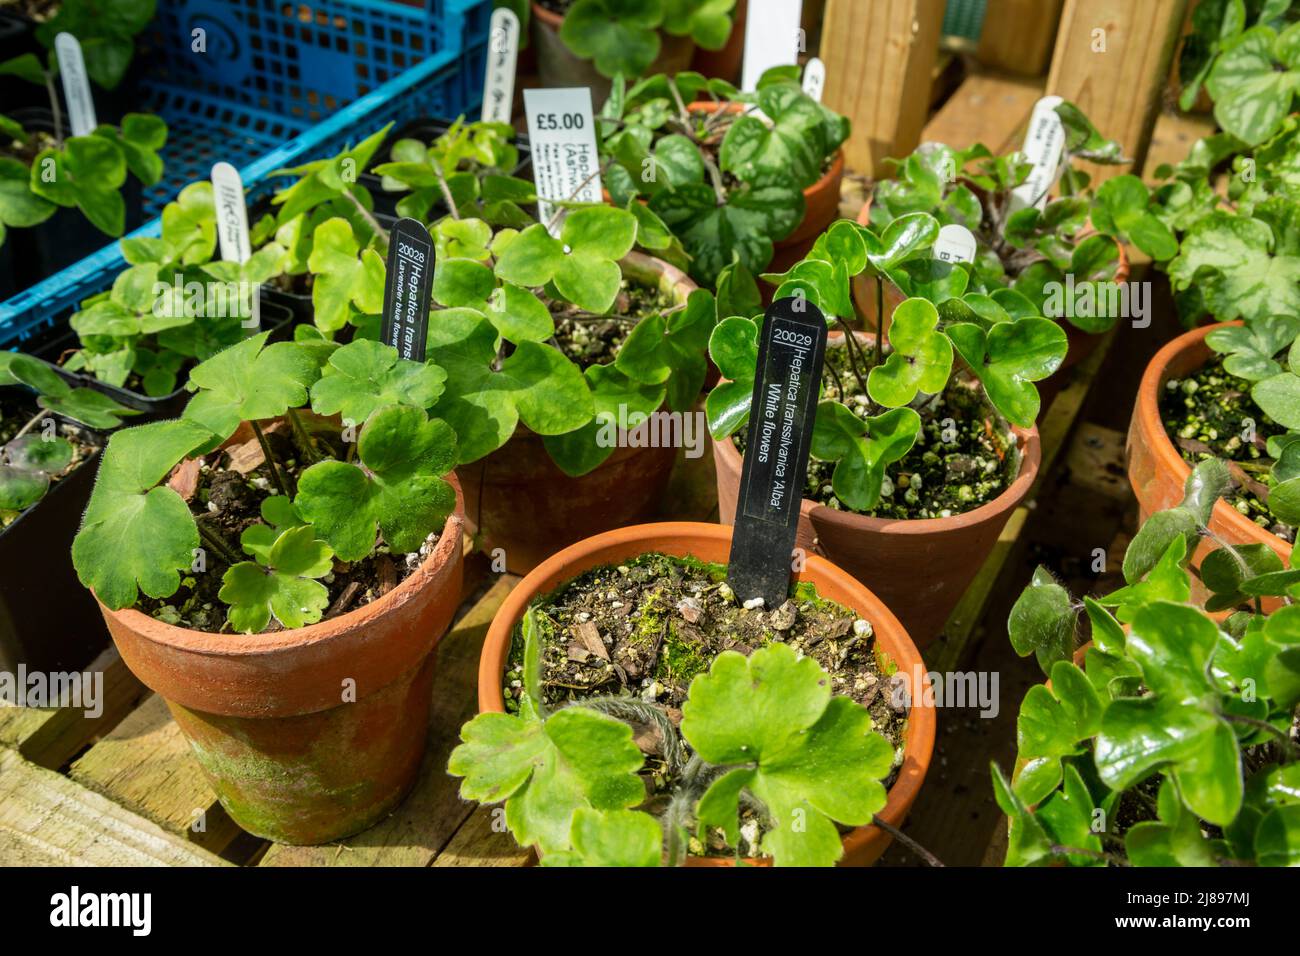 Hepatica Transsilvanica Alba growing in clay pots in a garden greenhouse Stock Photo